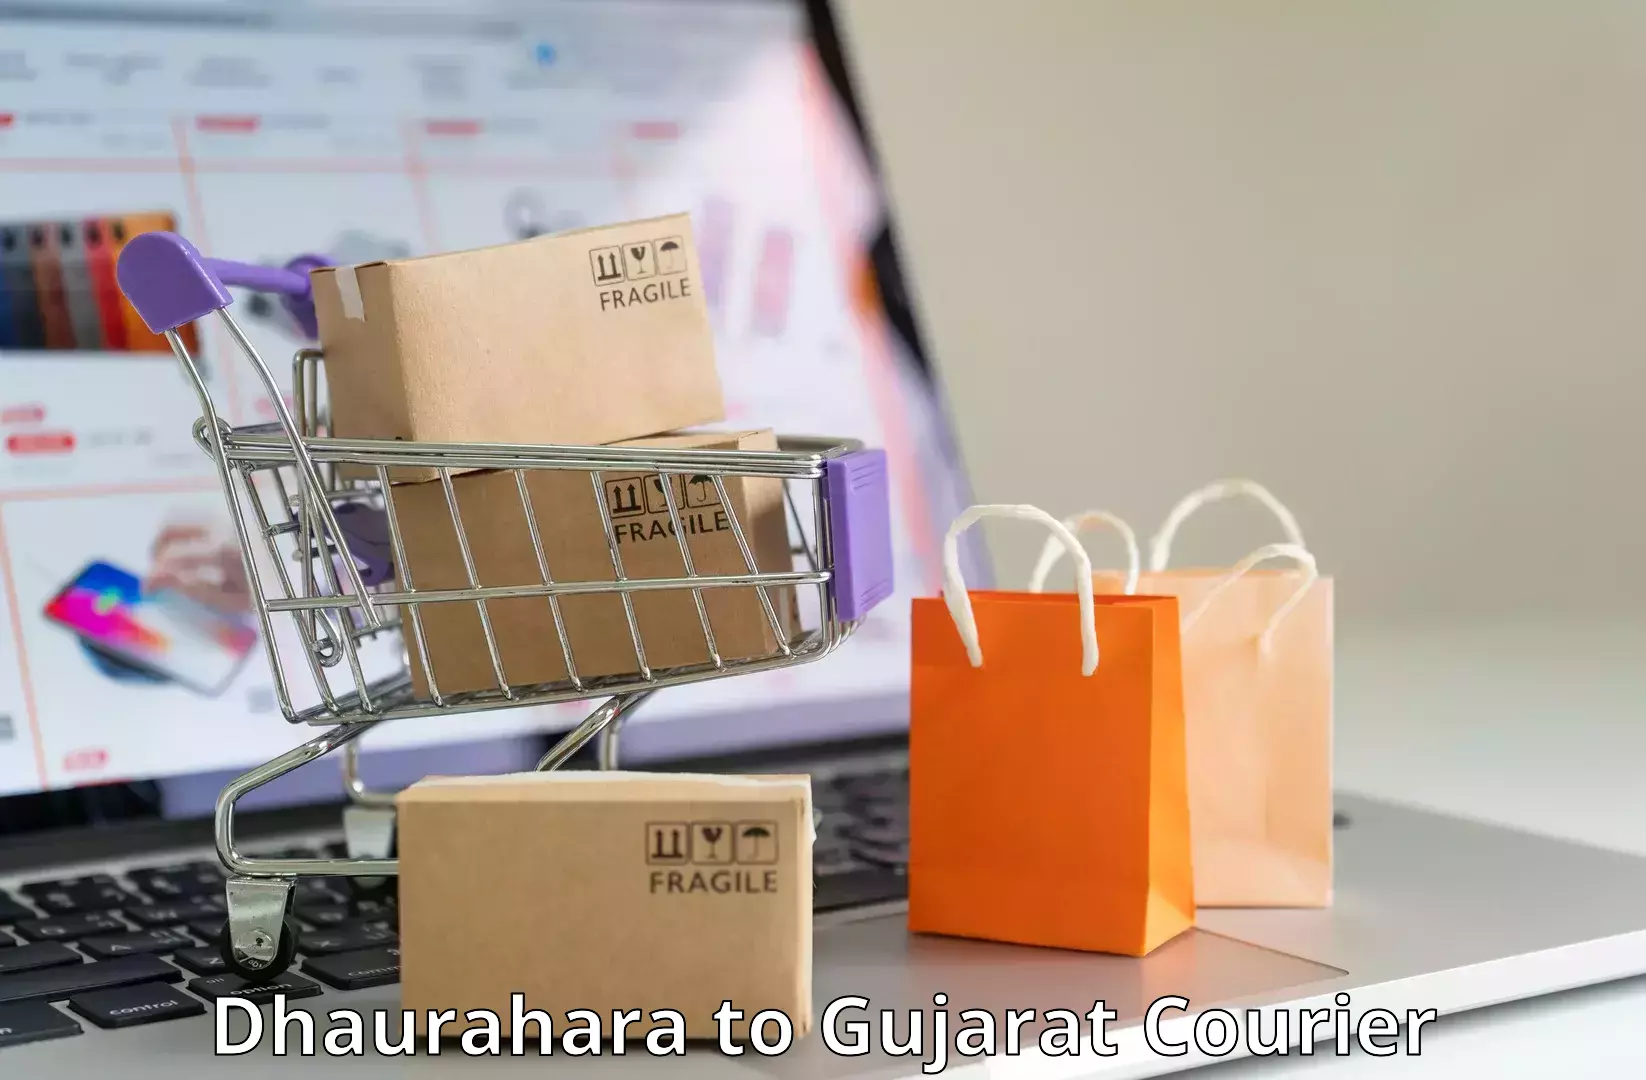 Full-service courier options Dhaurahara to Girgadhada